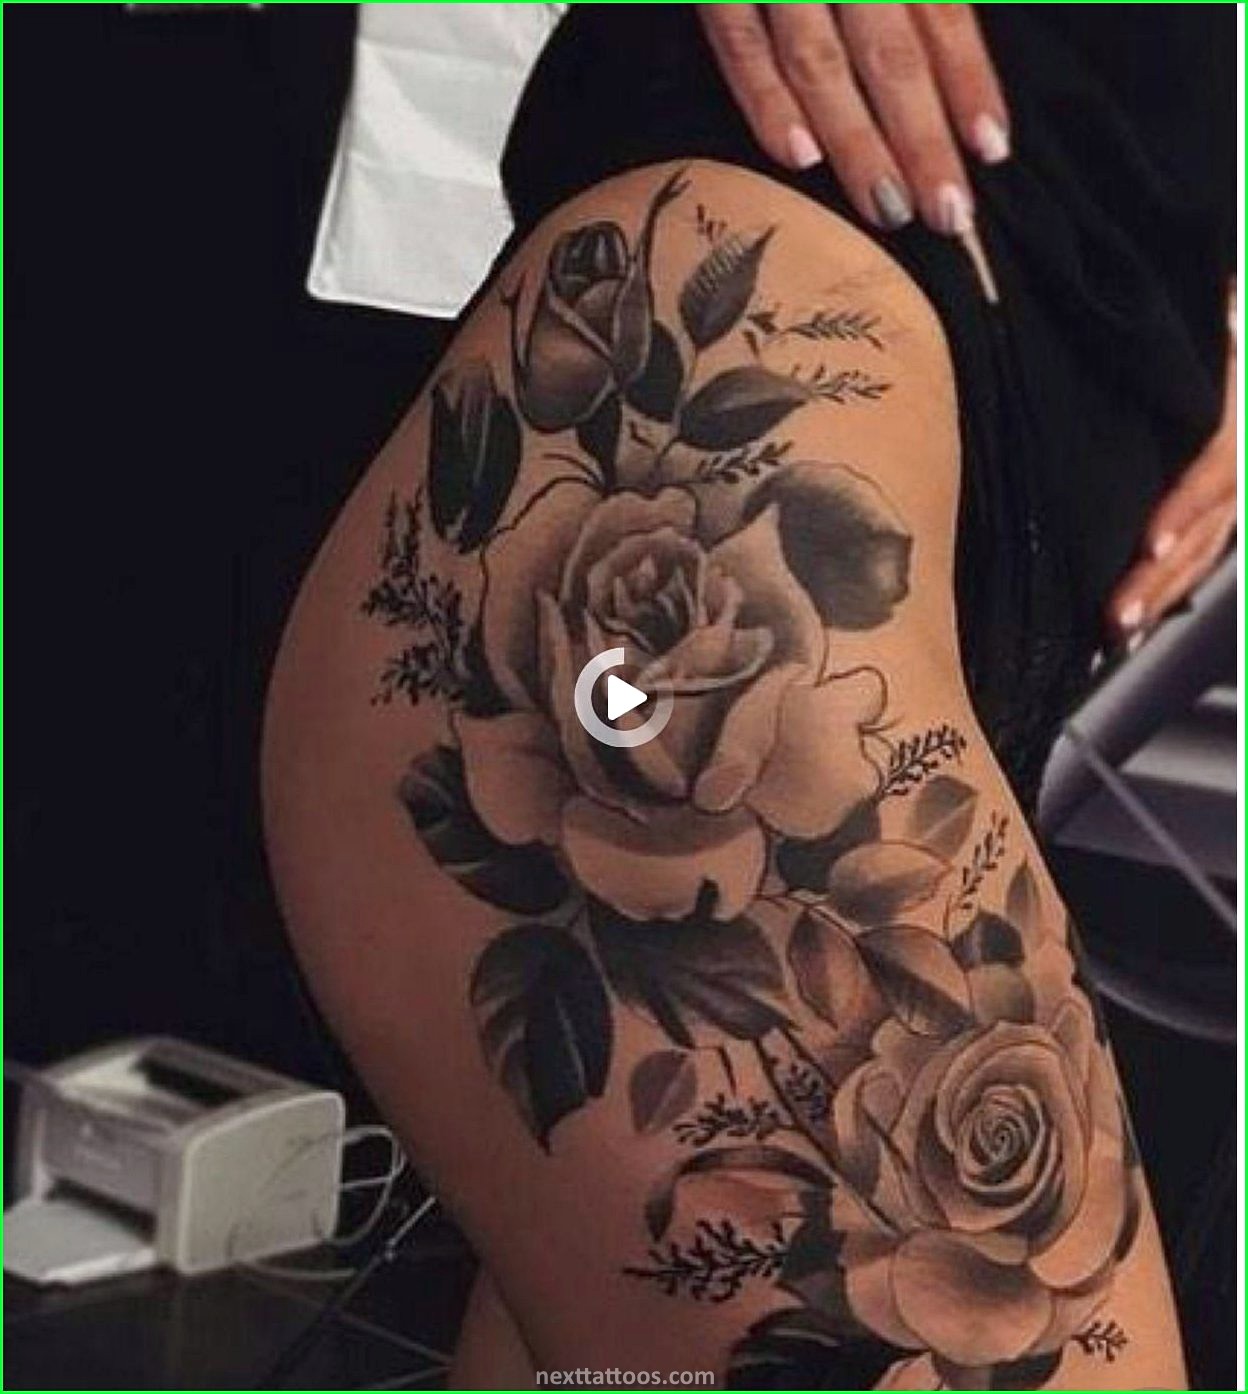 Female Thigh Tattoos Quotes - Popular Female Thigh Tattoo Designs